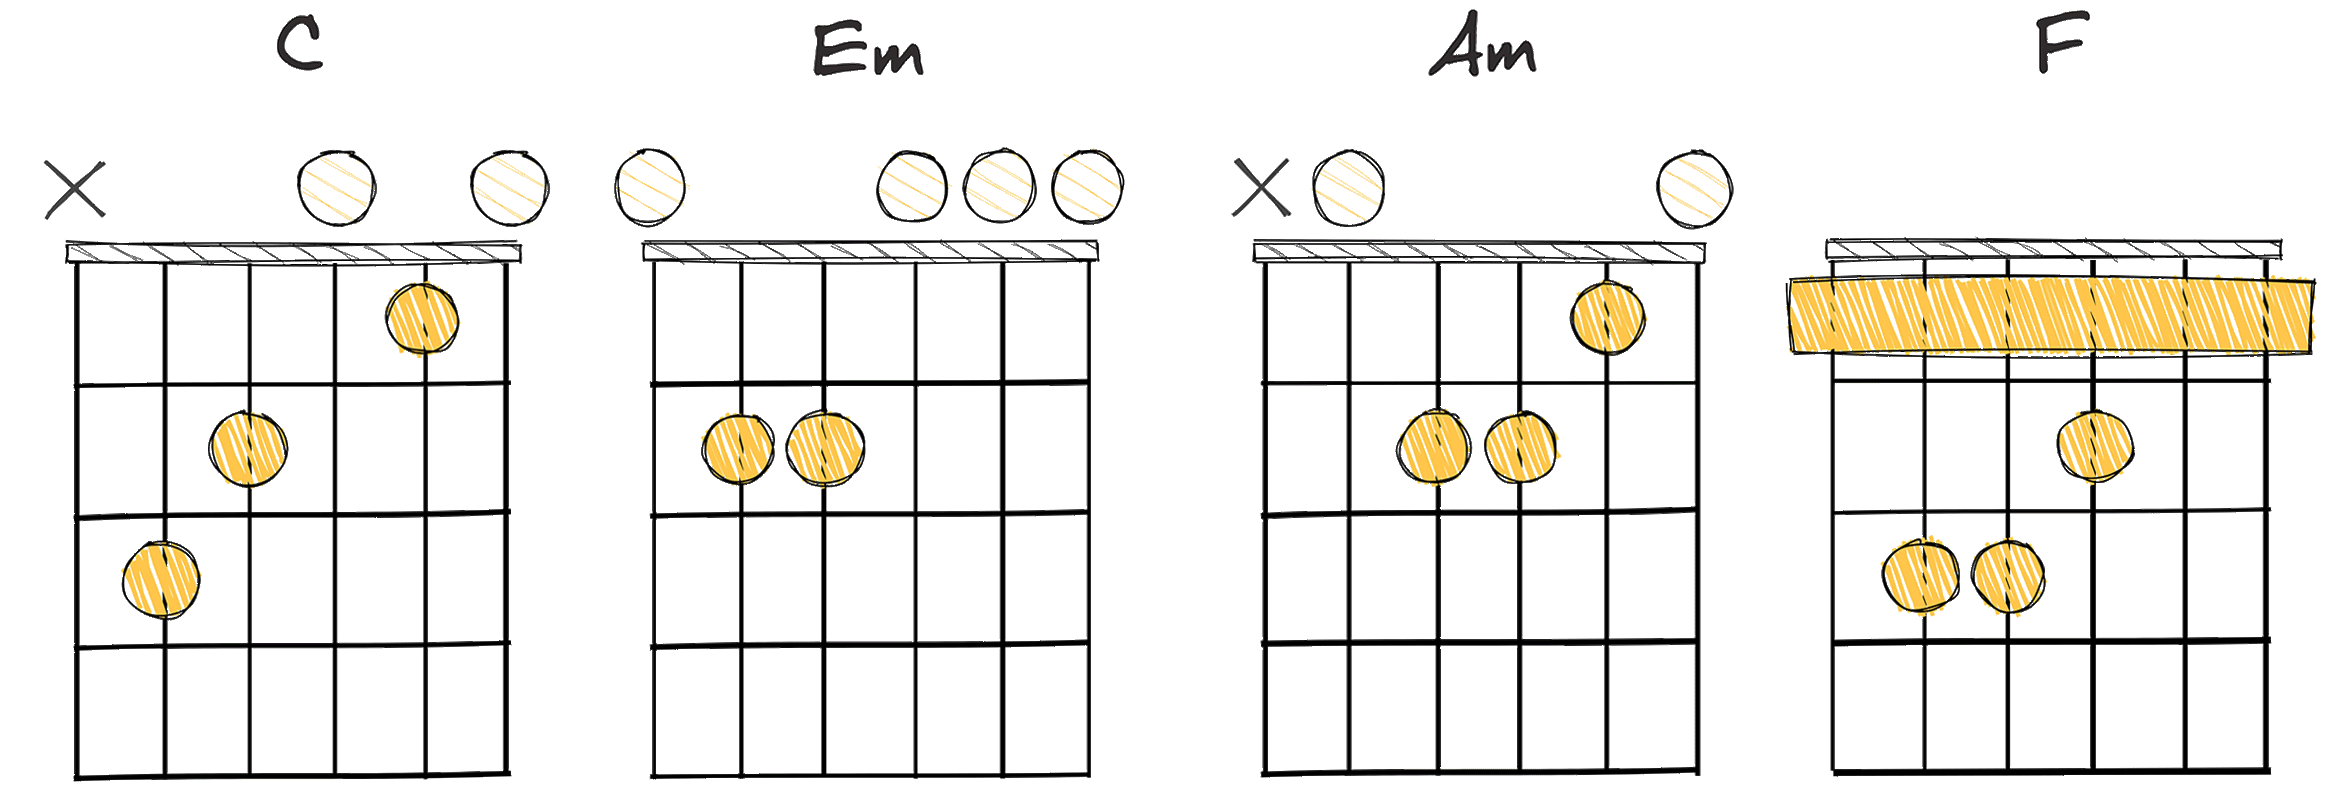 I – iii – vi – IV (1-3-6-4) chords diagram